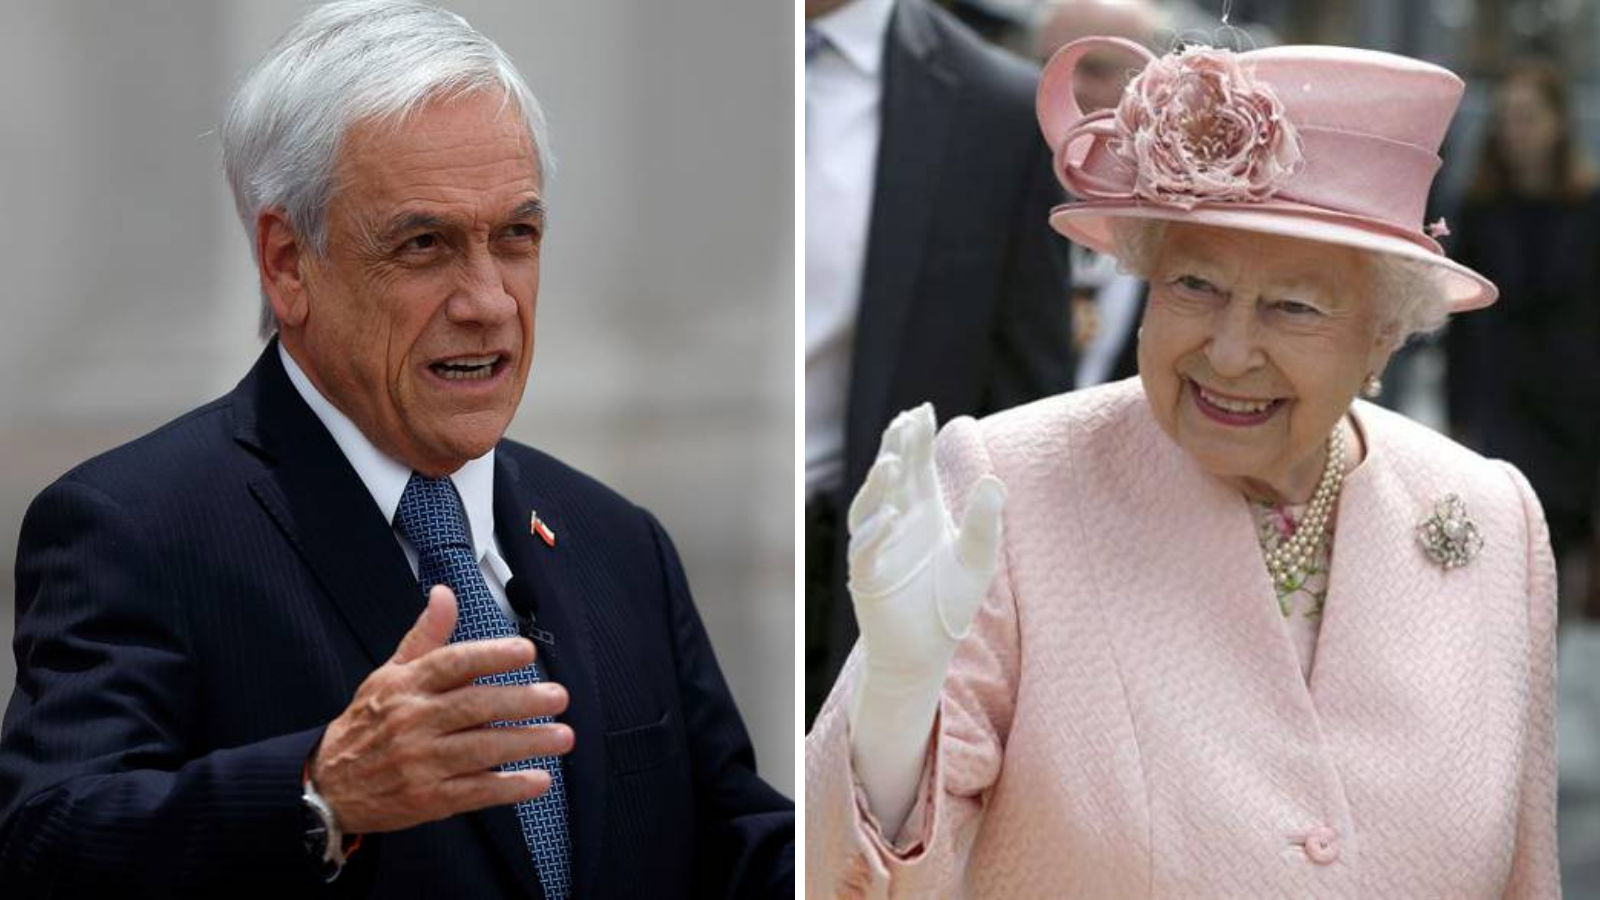 El día en que Sebastián Piñera le obsequió una roca de la mina San José a la Reina Isabel II